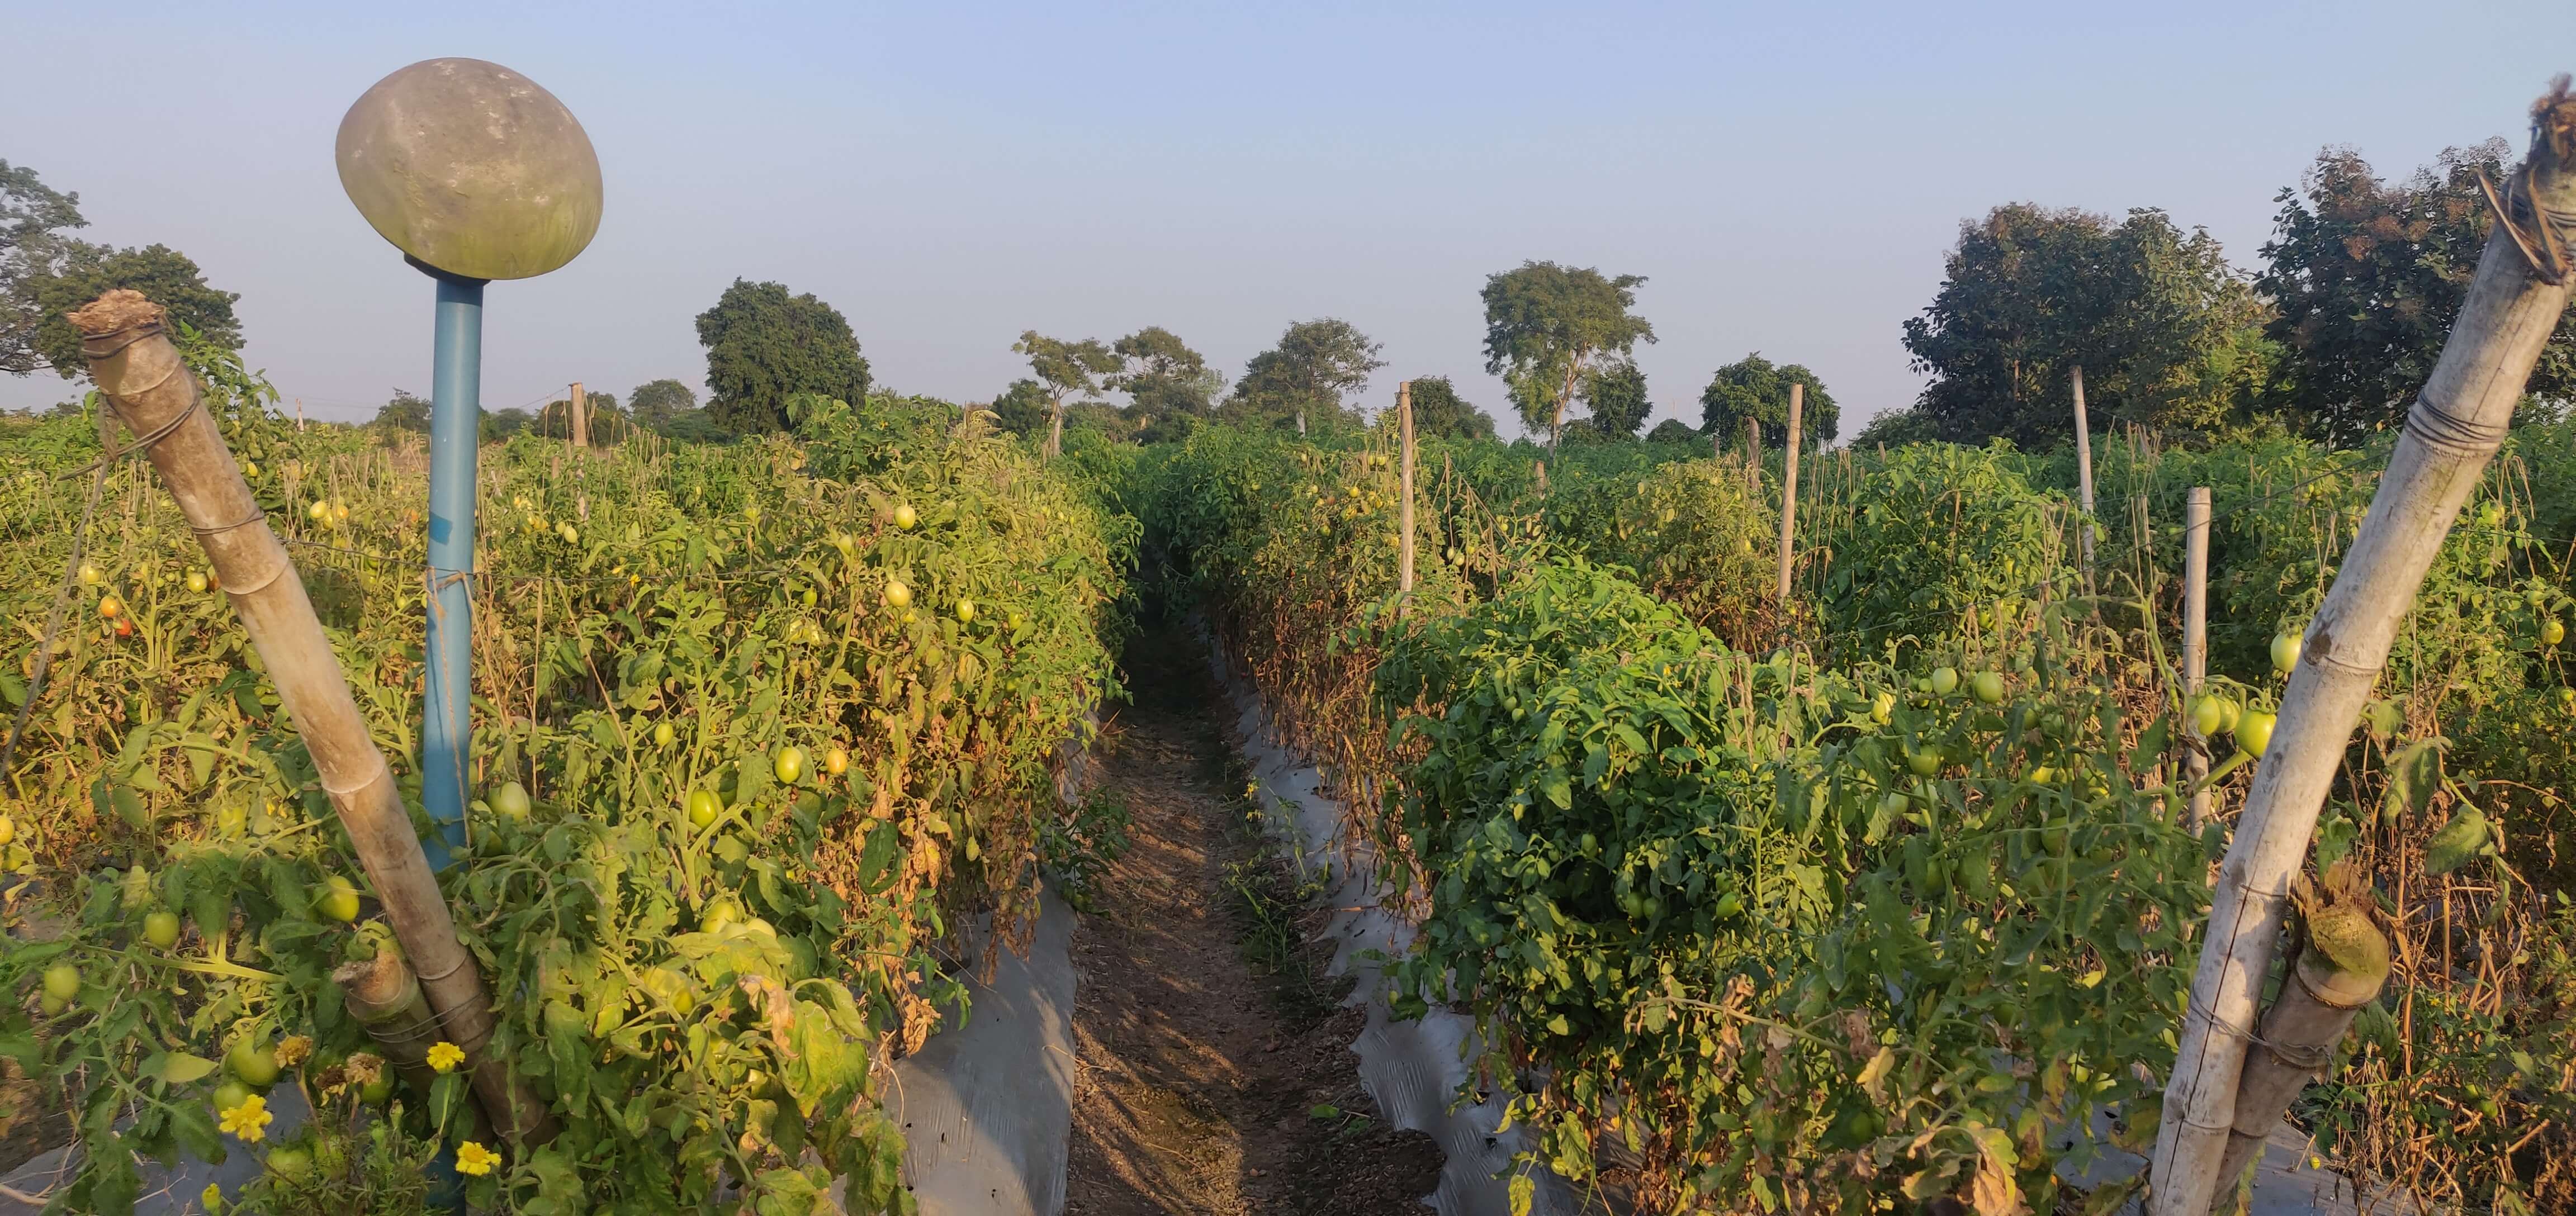 A tomato farm is close to the harvesting stage in November in Madhya Pradesh. Photo by Monika Agarwal/WRI India.